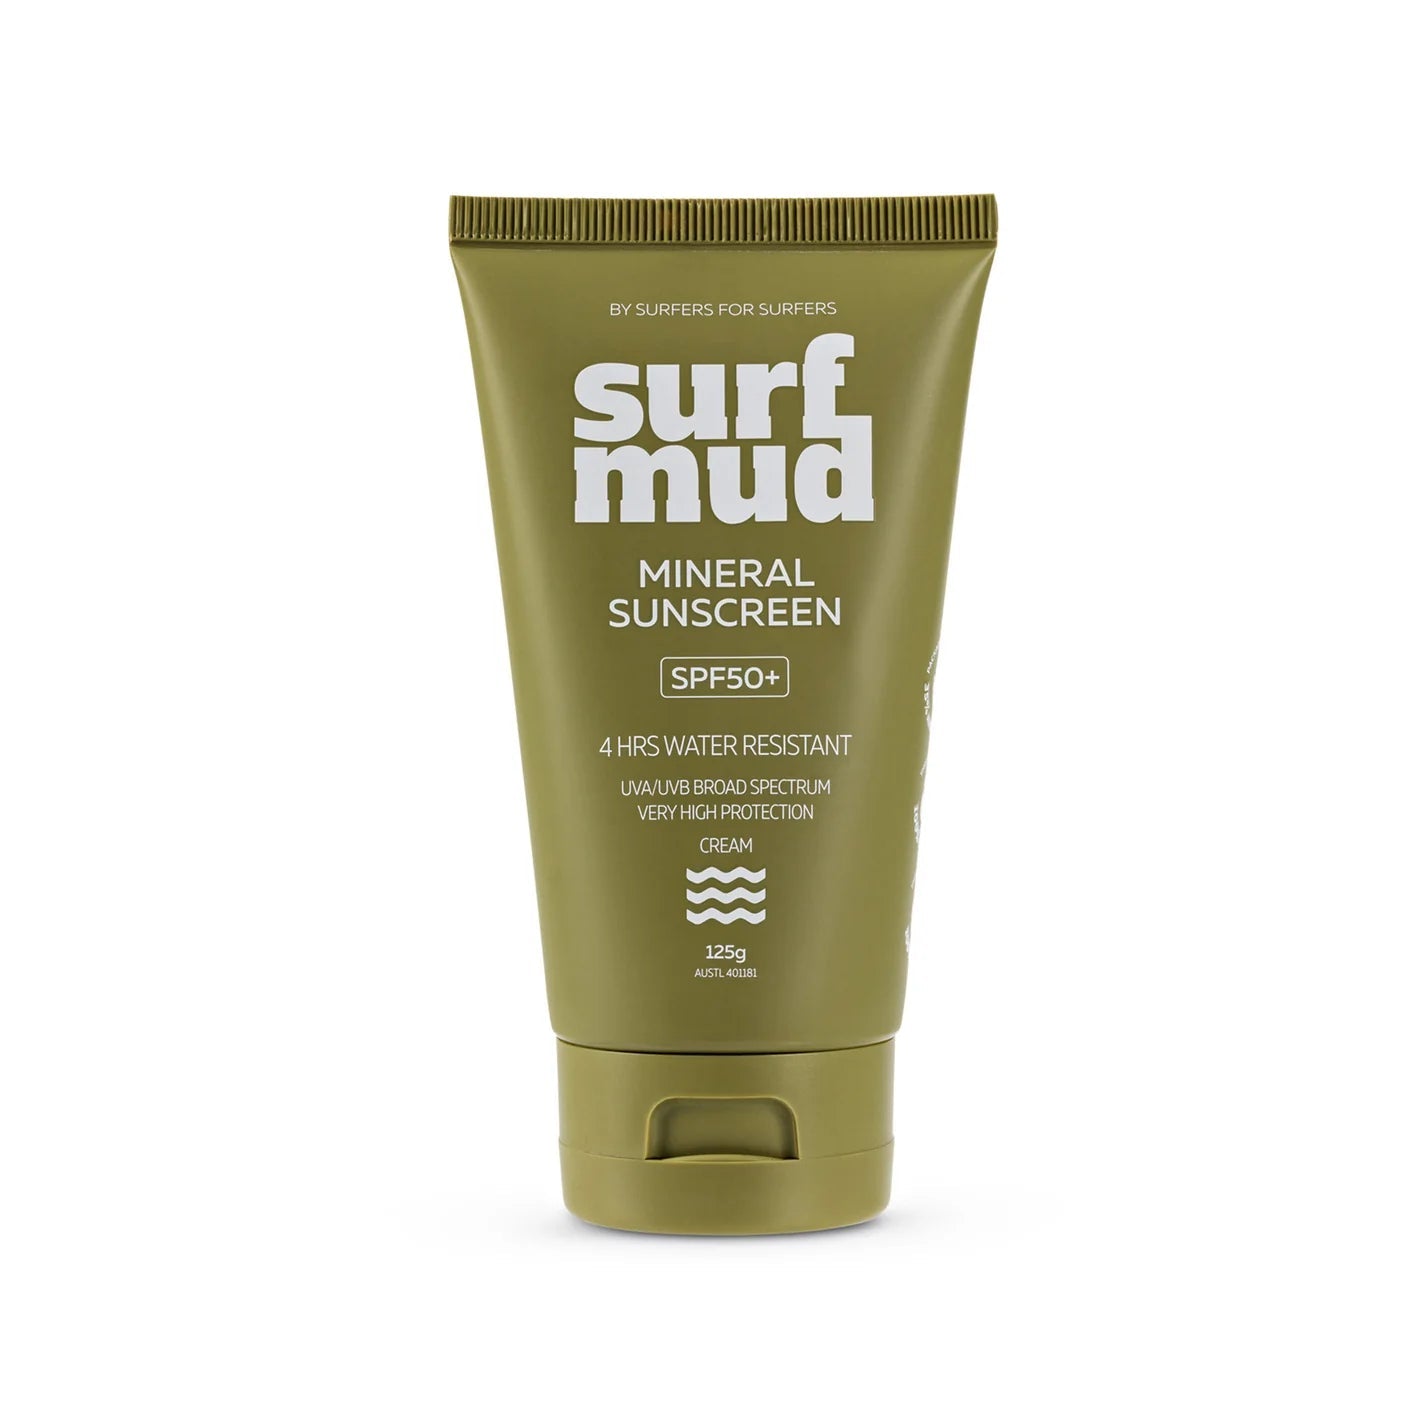 Surf Mud Mineral Sunscreen SPF50+ Sunscreen SURF MUD 125g 